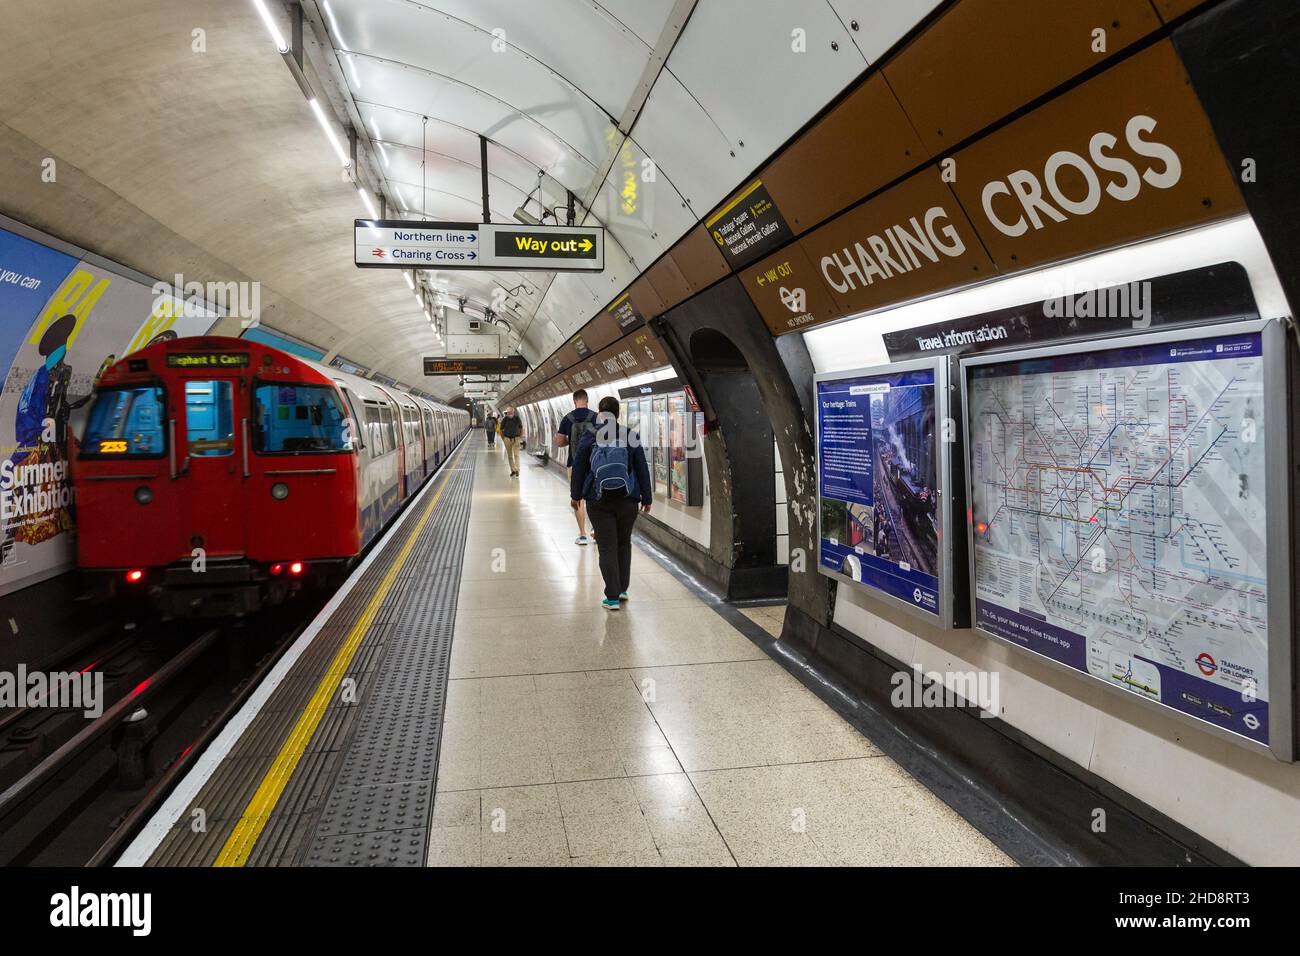 Bakerloo Line platform at Charing Cross  station on the London Underground Stock Photo